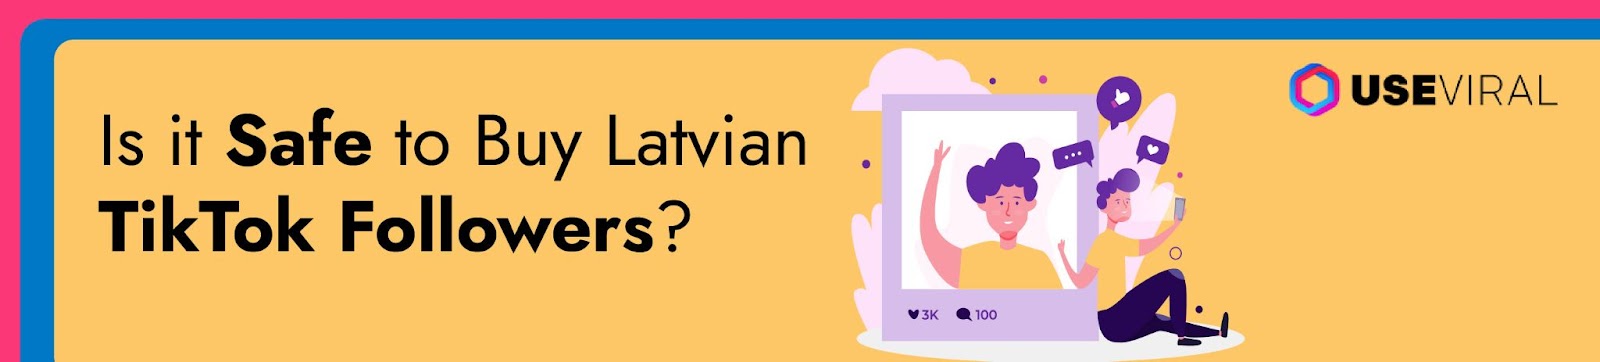 Is it Safe to Buy Latvian TikTok Followers?